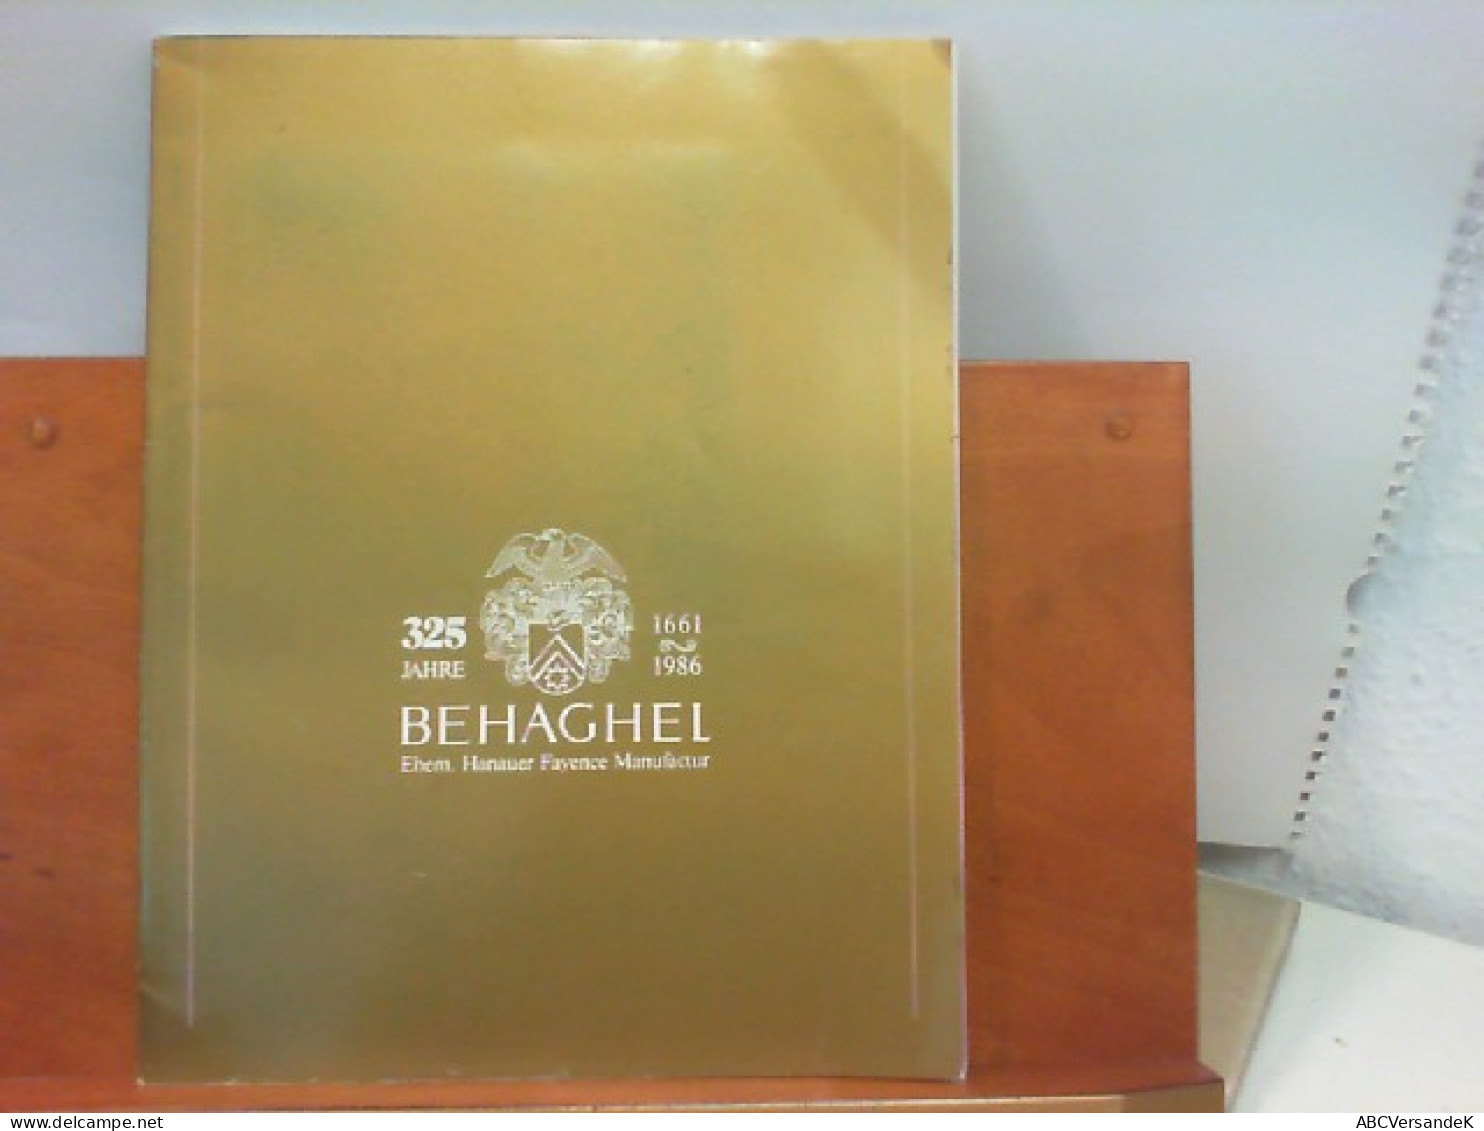 Katalog 325 Jahre Beghaghel In Frankfurt Am Main 1661 - 1986 - Tecnica